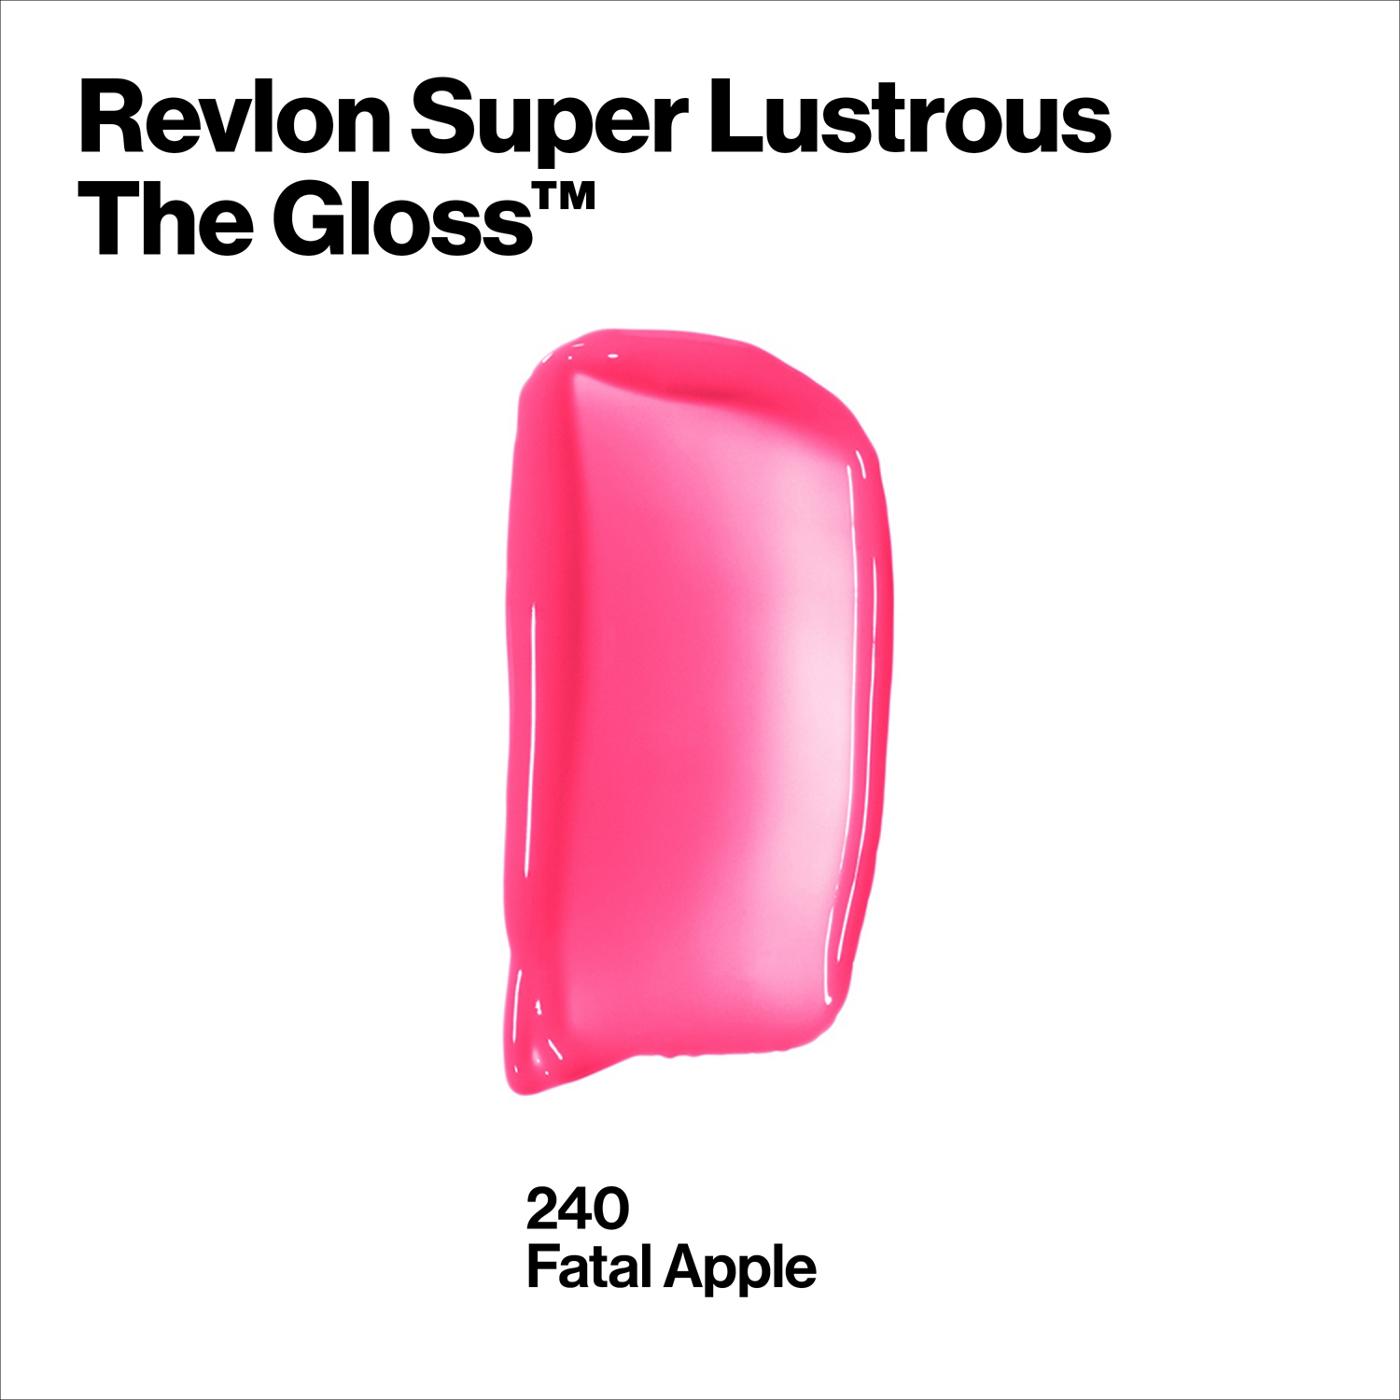 Revlon Super Lustrous The Gloss, 240 Fatal Apple; image 5 of 9